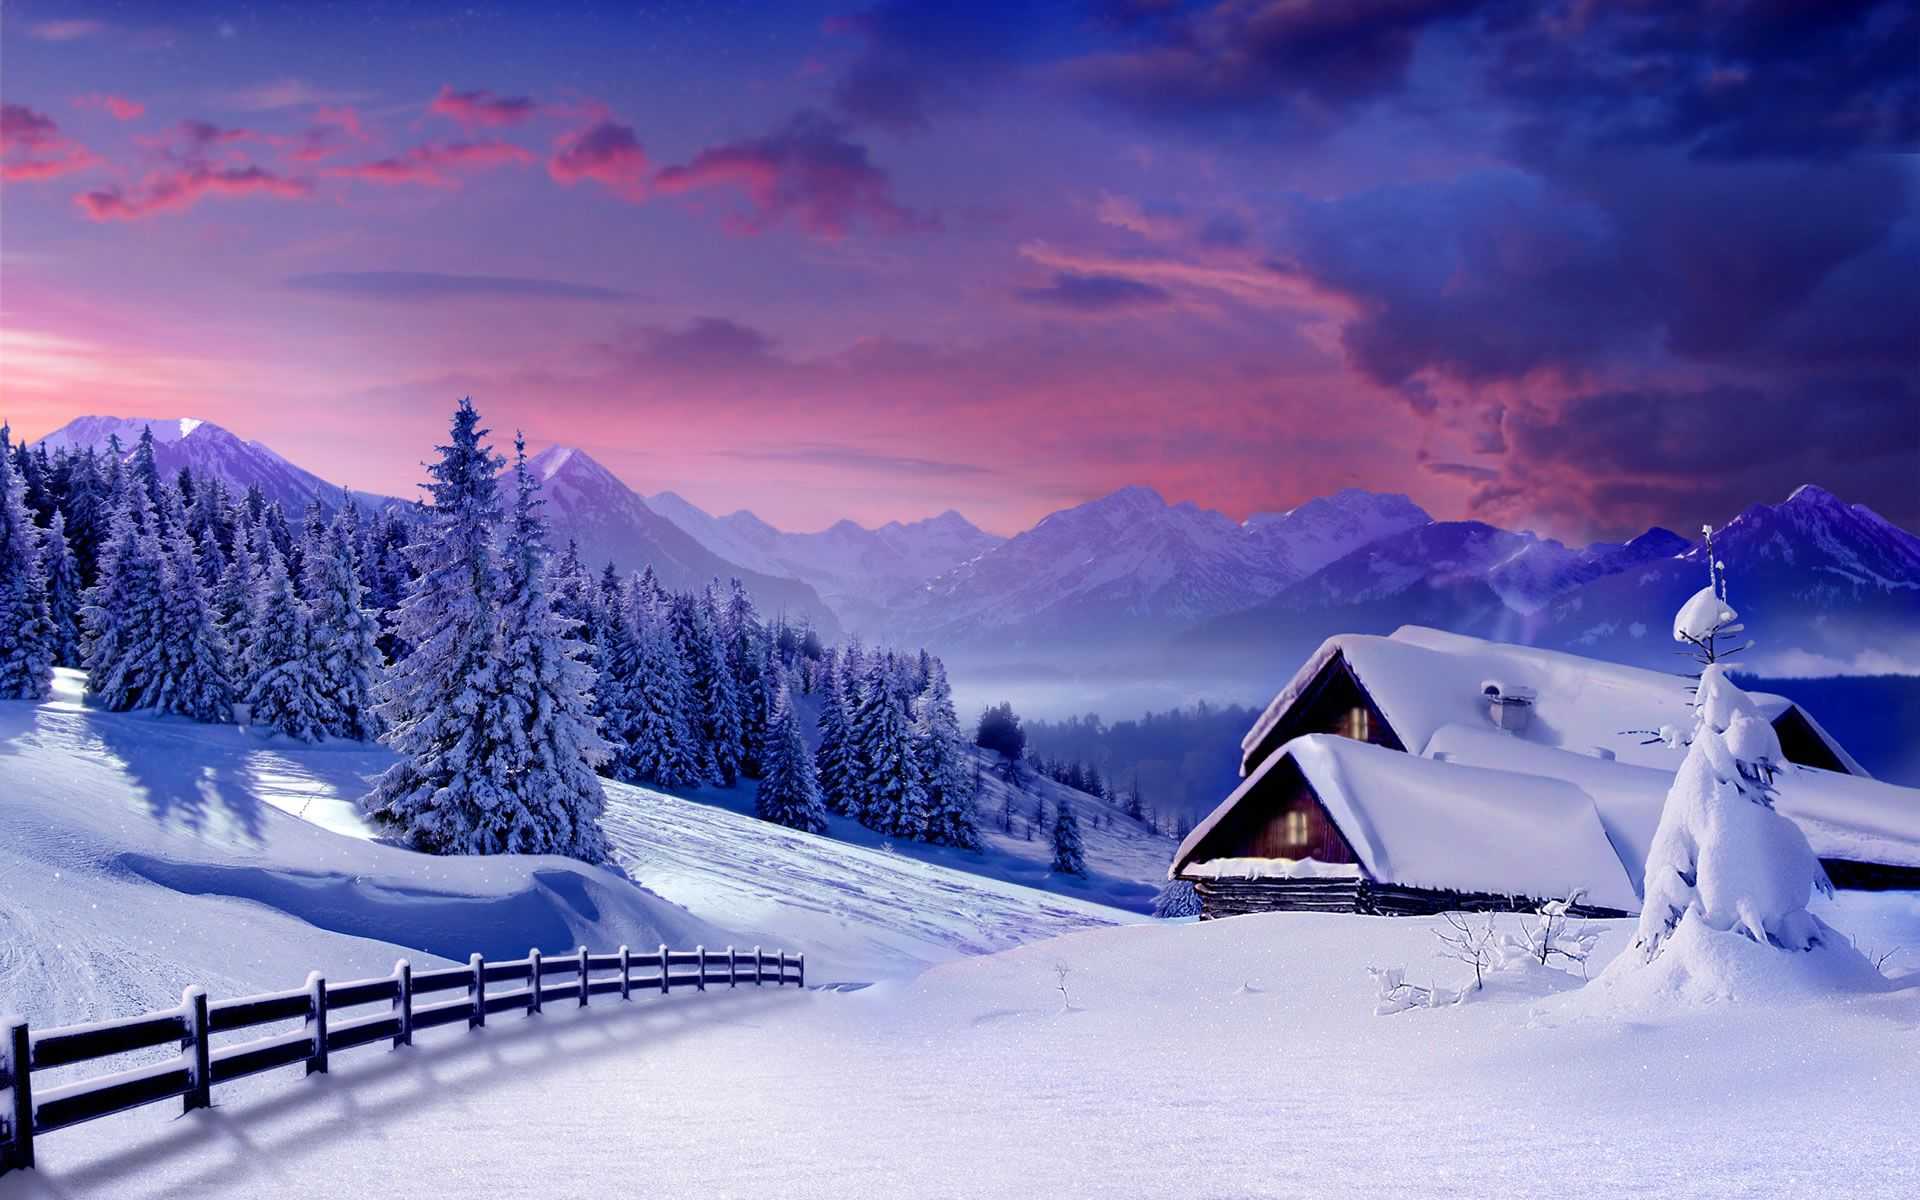 winter nature scenes wallpaper